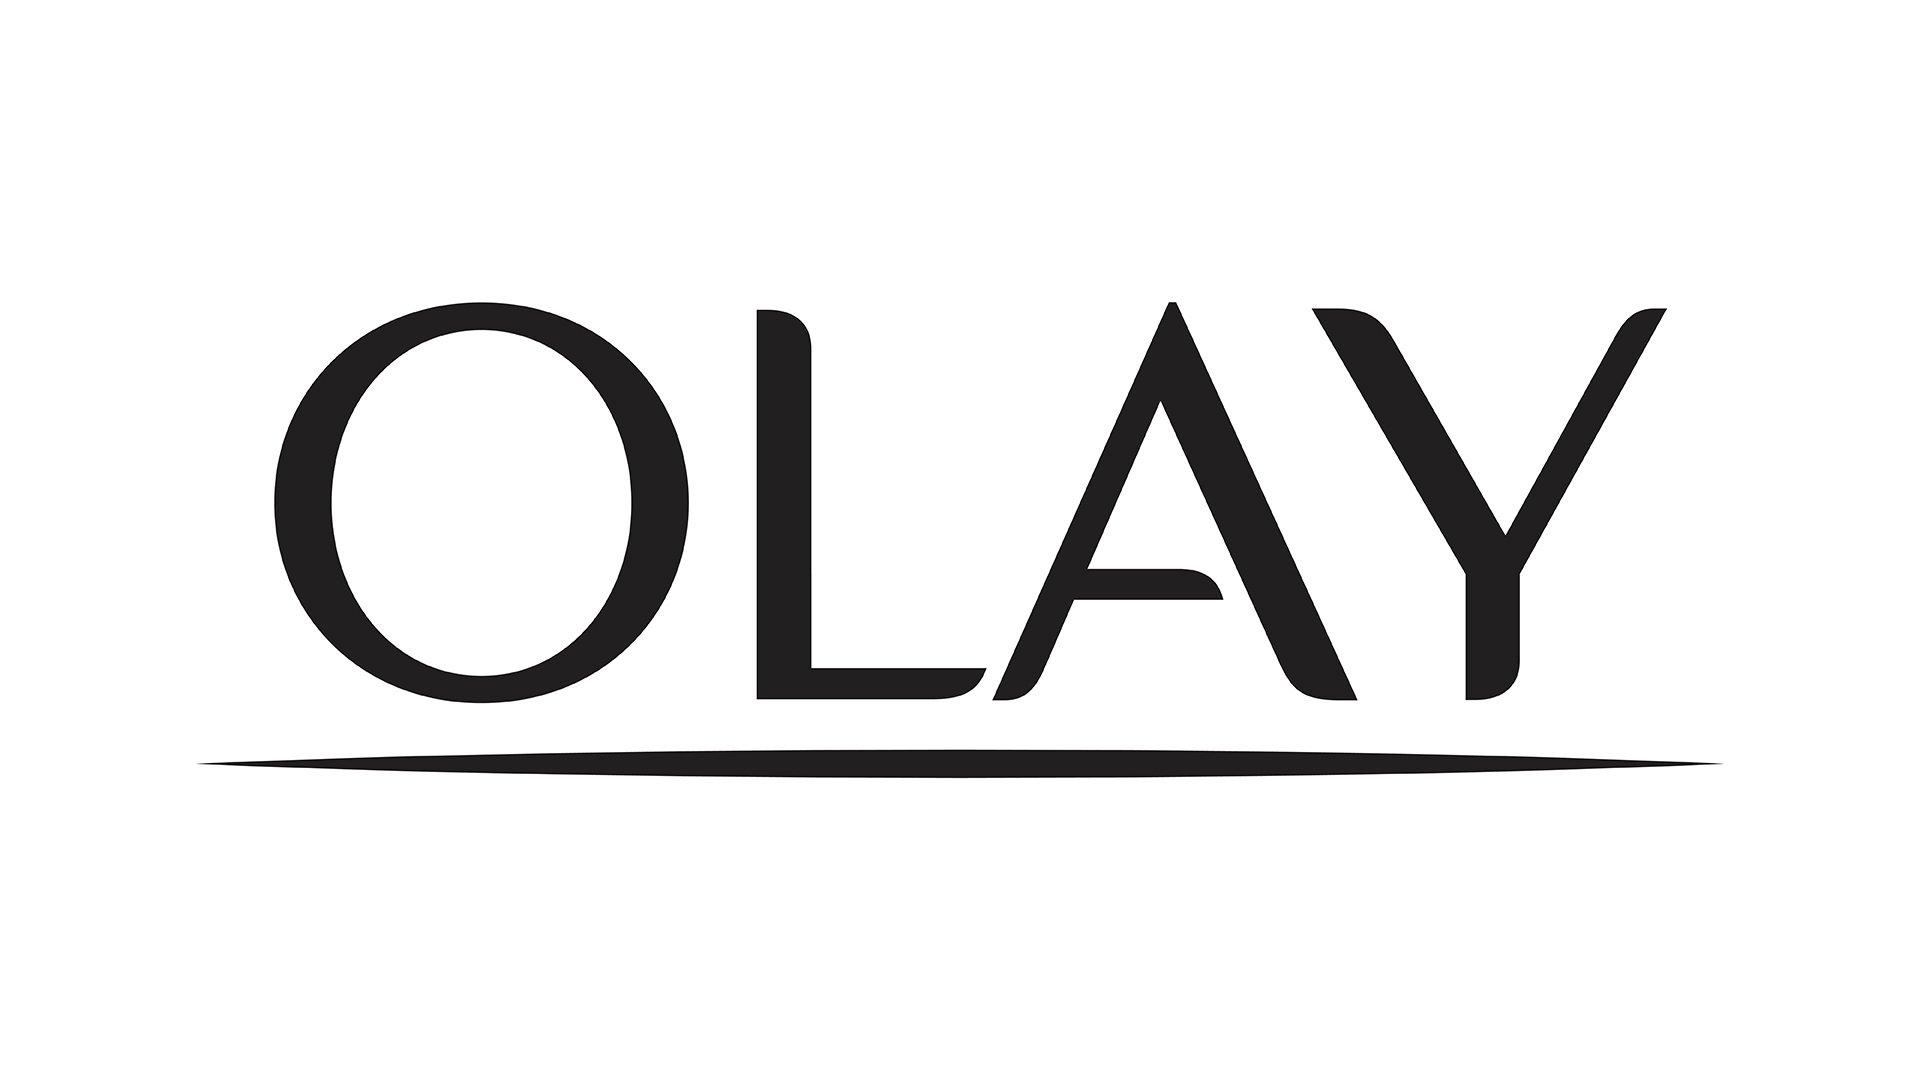 Logo thương hiệu Olay (Nguồn: Internet).